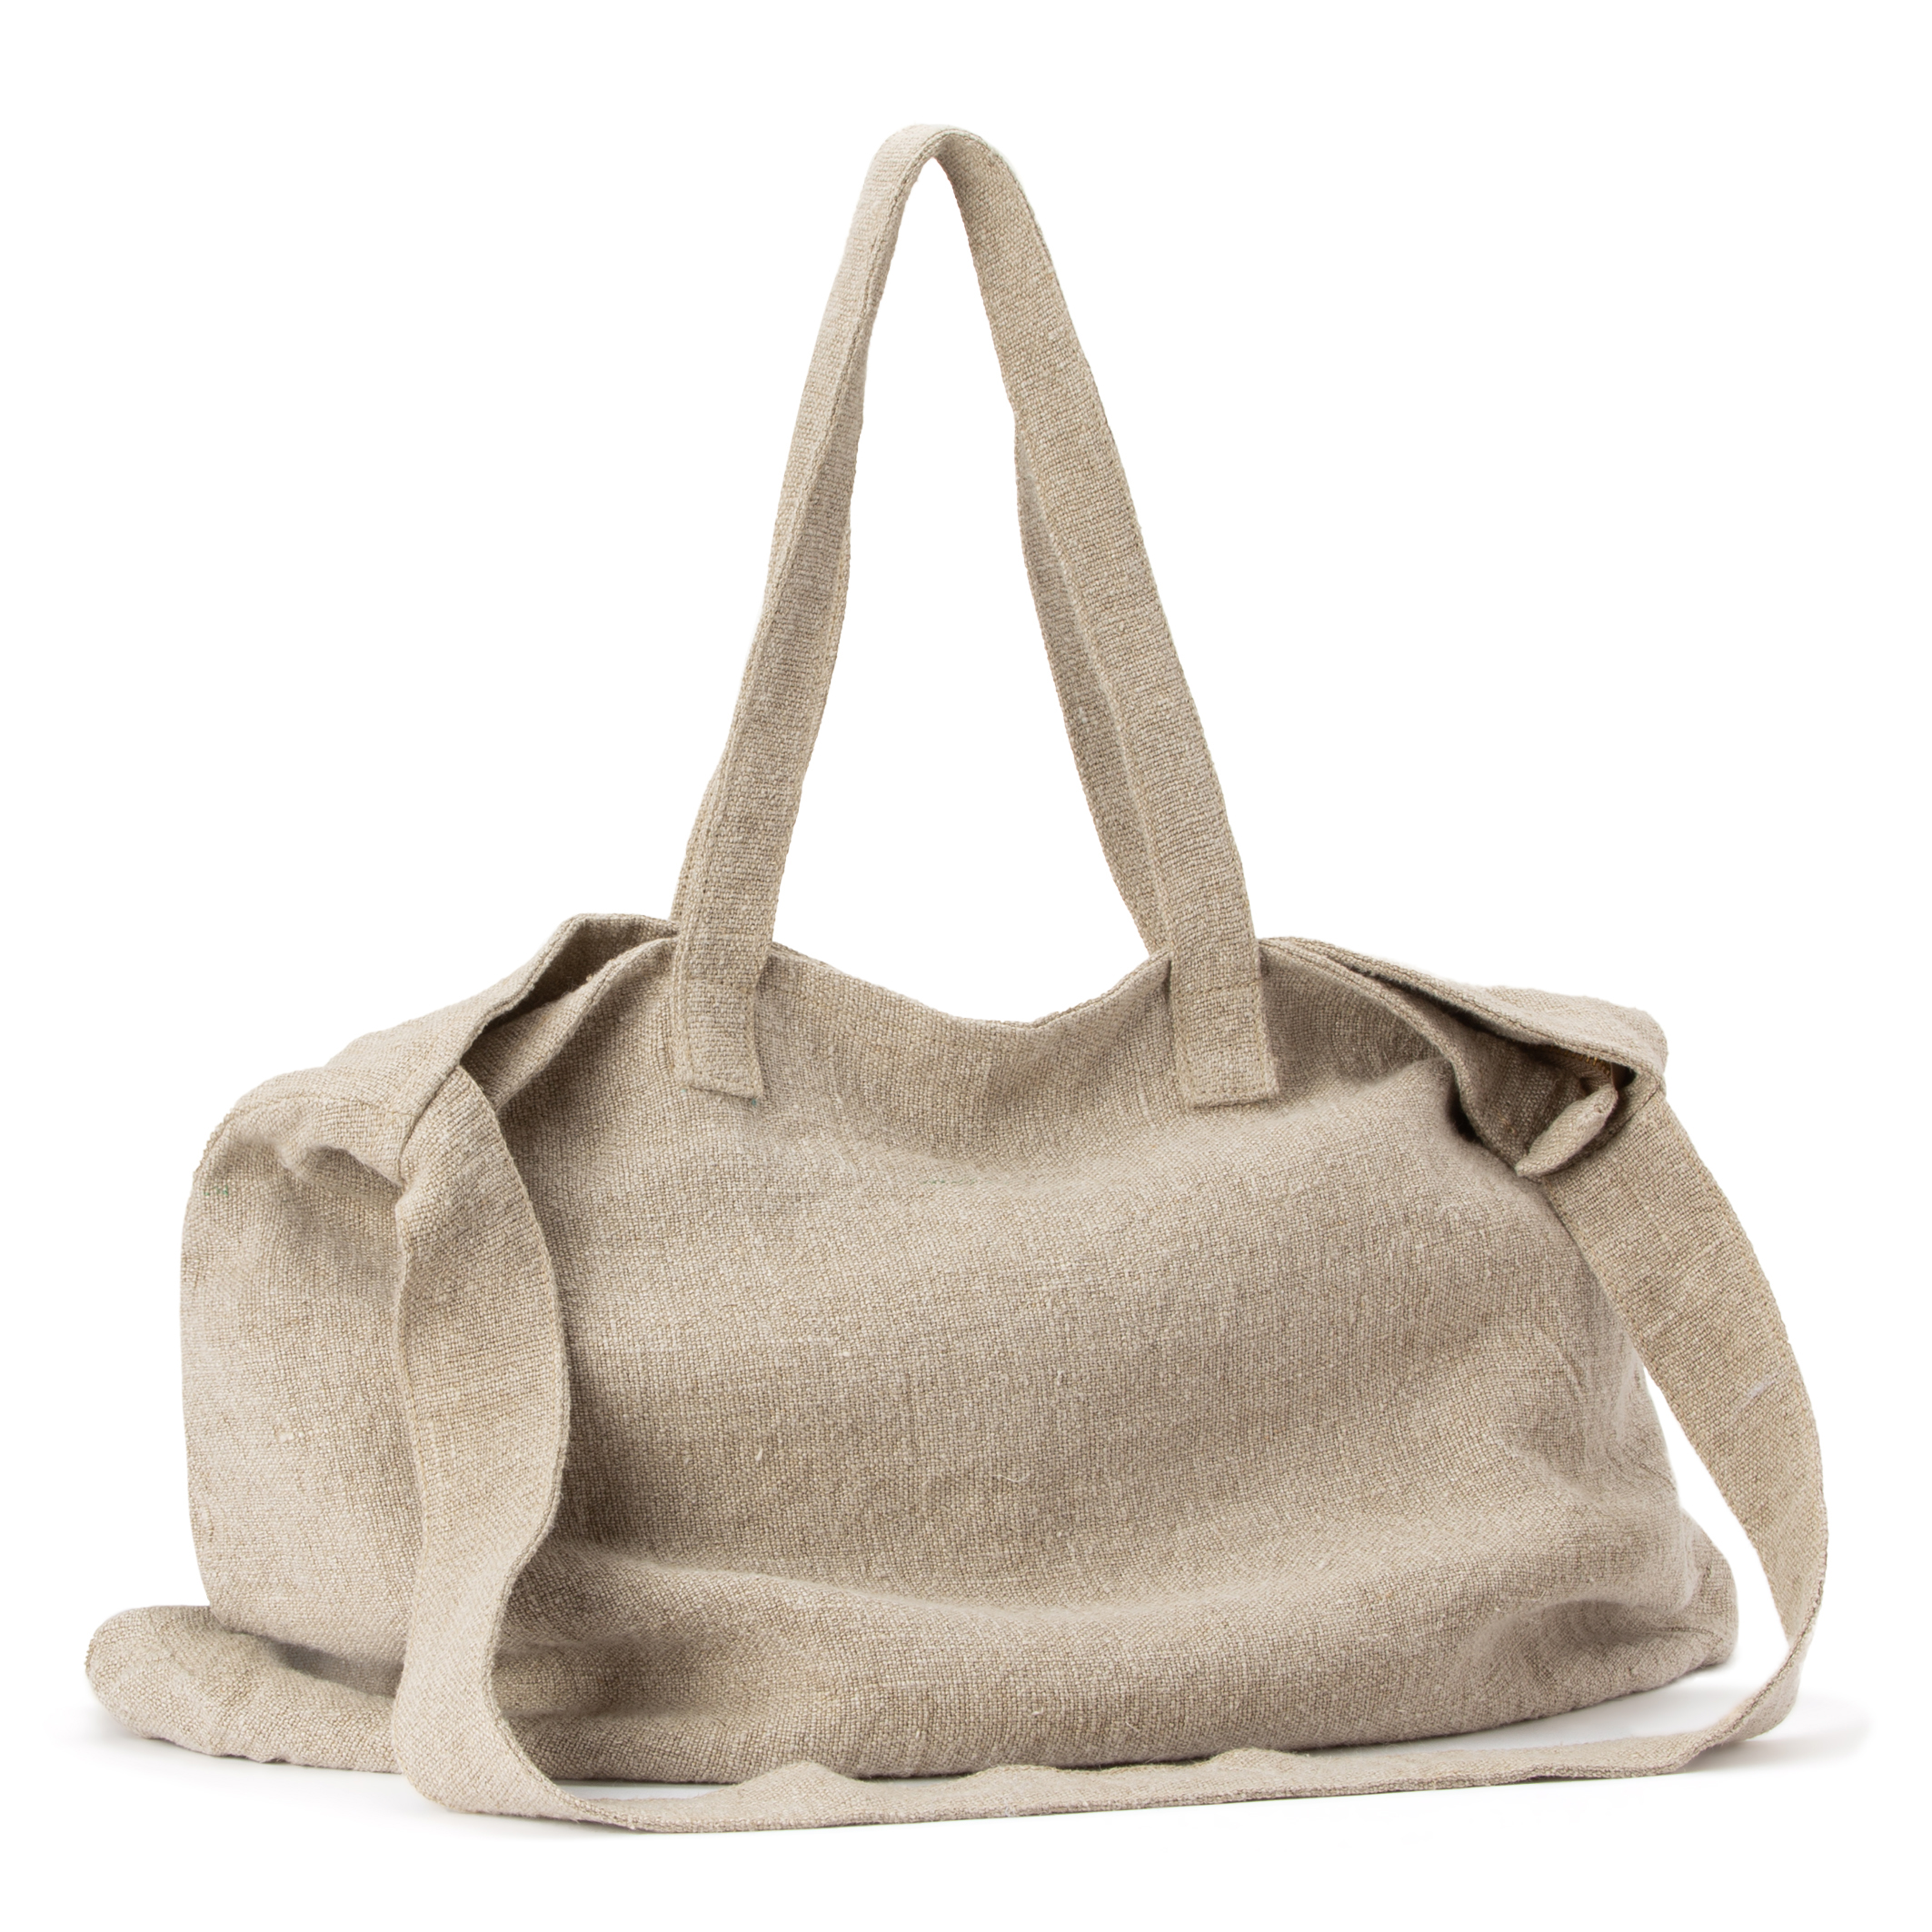 Accessorize London Women's Pure Organic Cotton Black & White Dogtooth Tote Bag